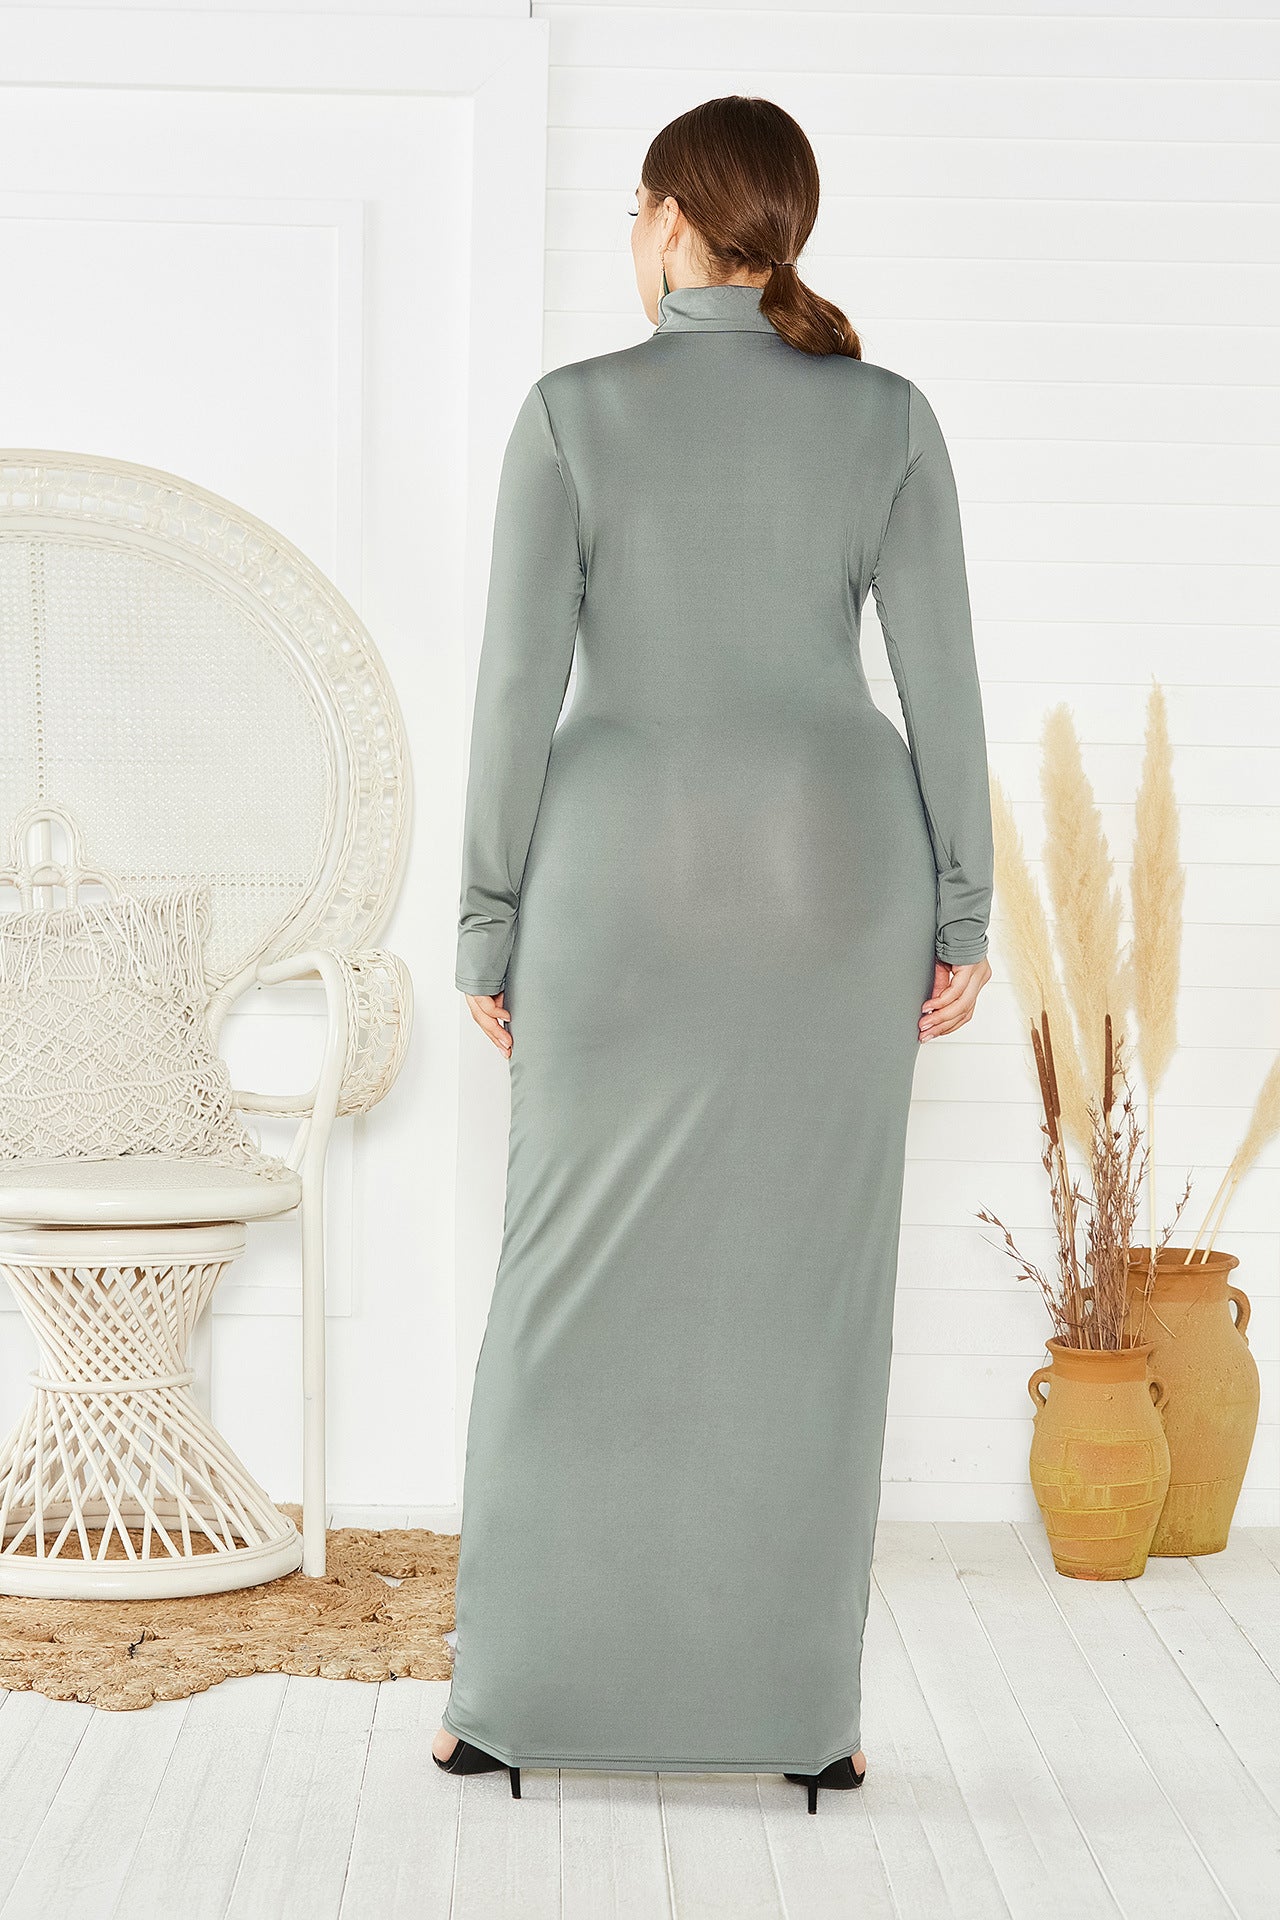 Elegant Turtleneck Plus Sizes Dresses